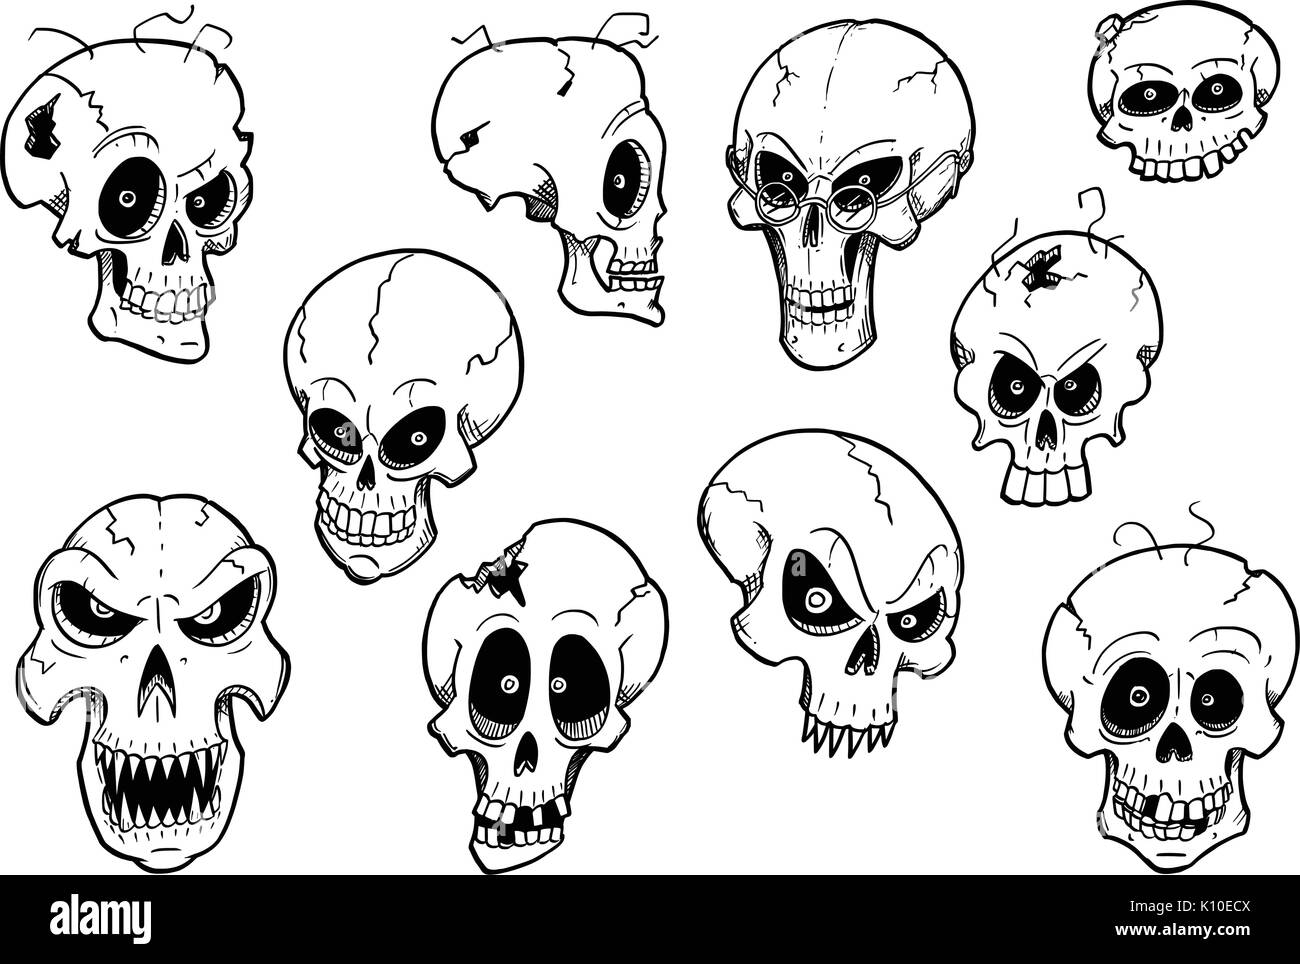 Jeu de cute dessin illustration de halloween crâne humain conçoit. Illustration de Vecteur